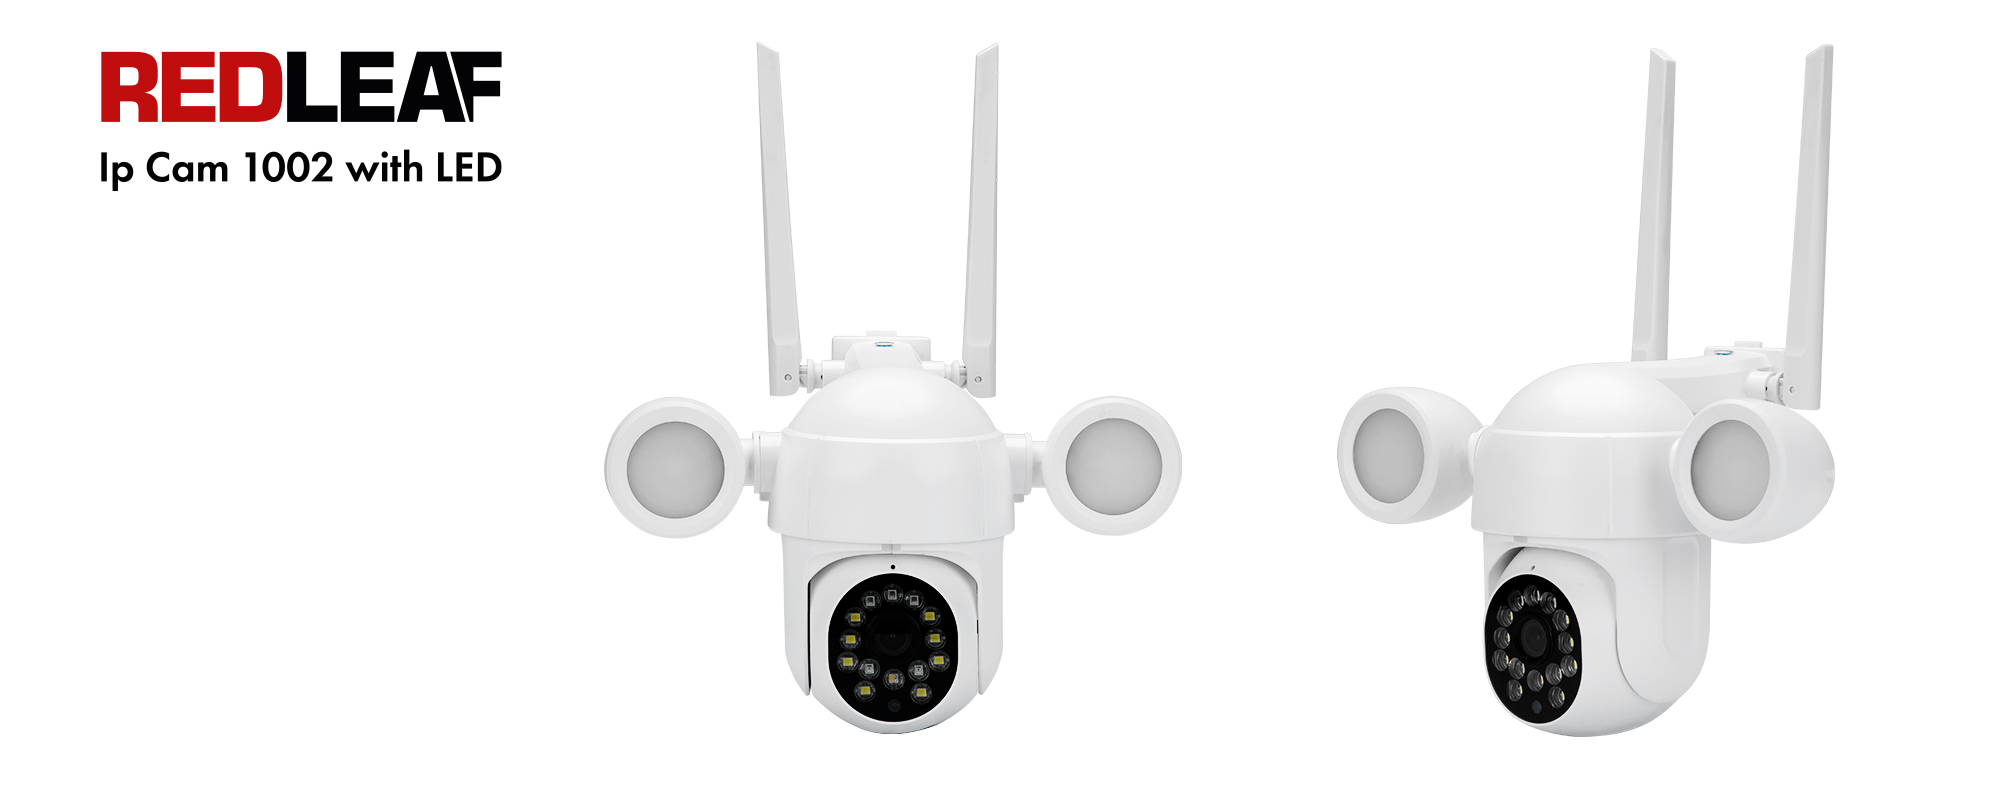 Redleaf IP Cam 1002 WiFi surveillance camera with LED light